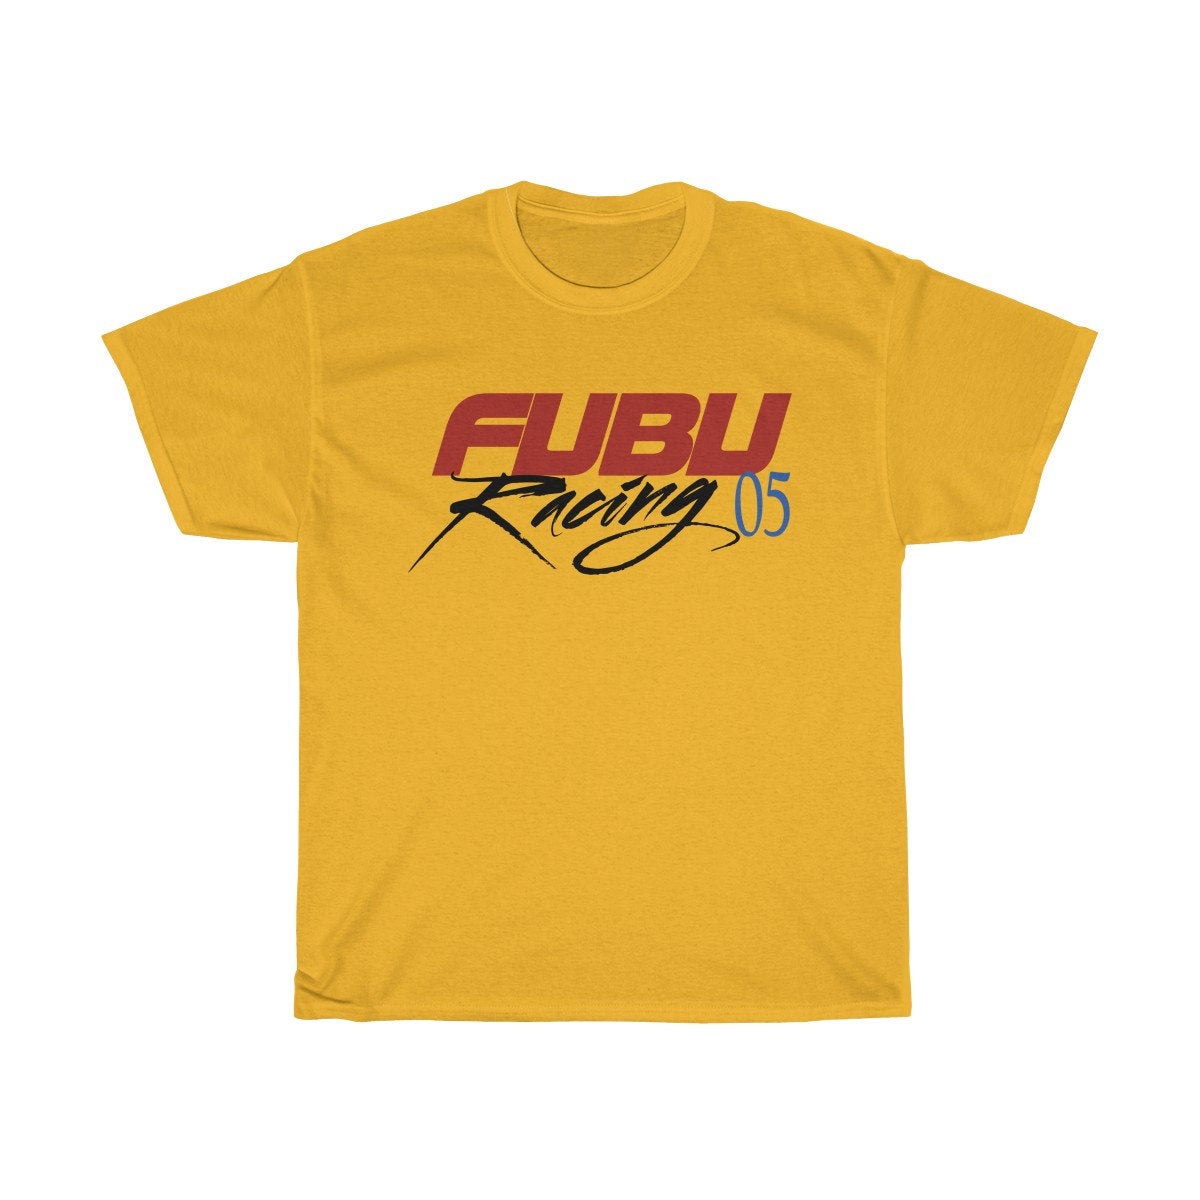 Fubu Racing 05 TShirt